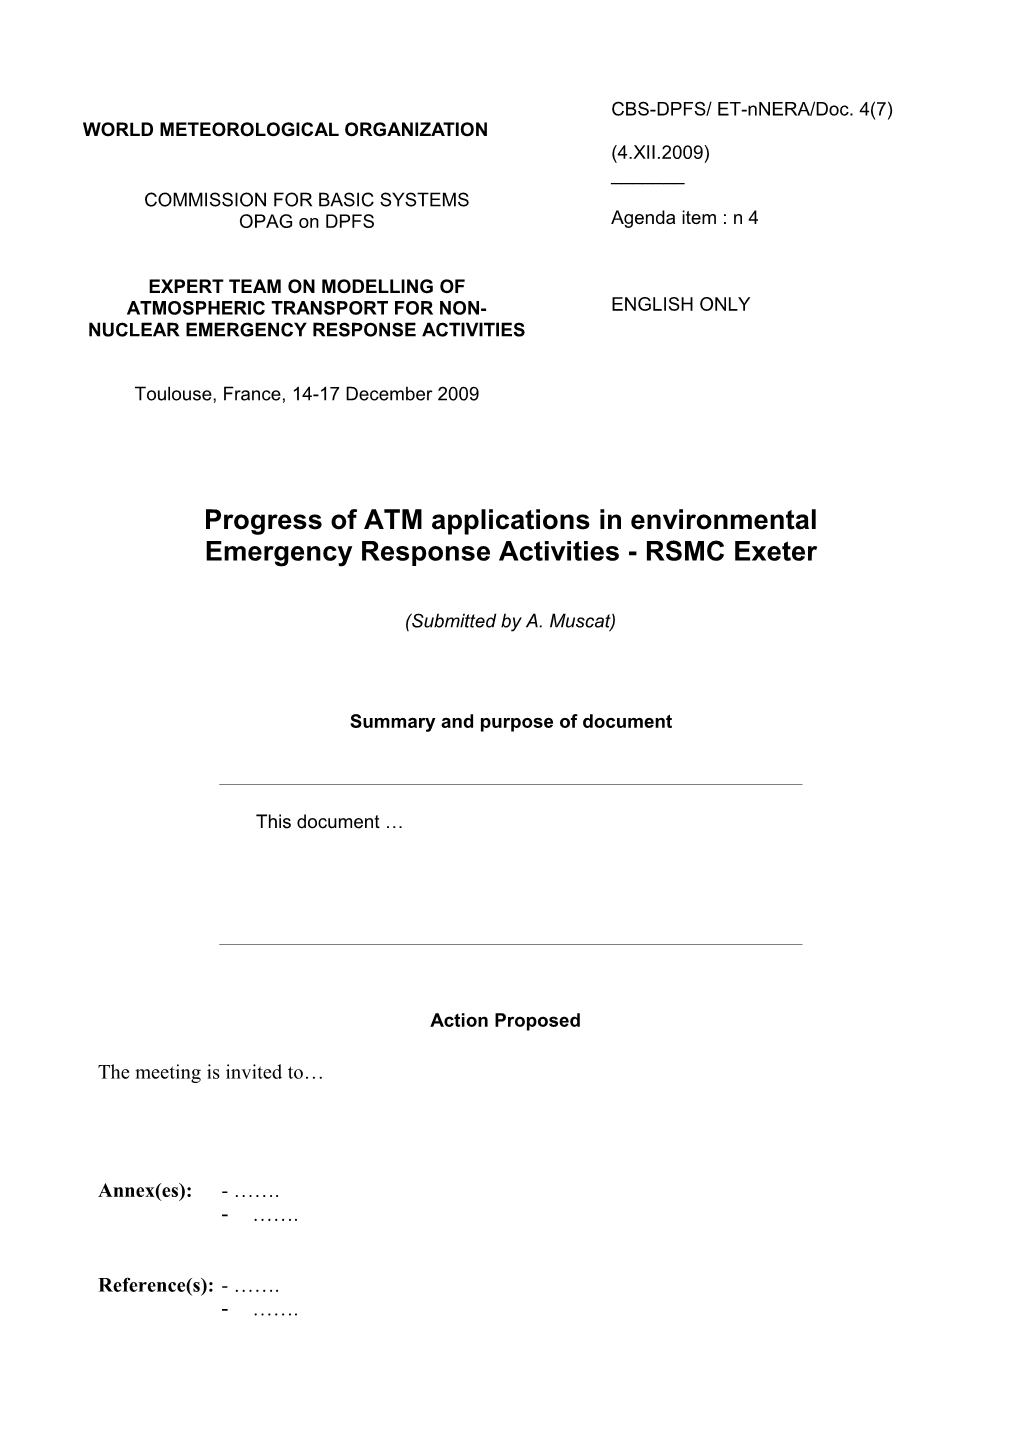 Progress of ATM Applications in Environmental Emergency Response Activities